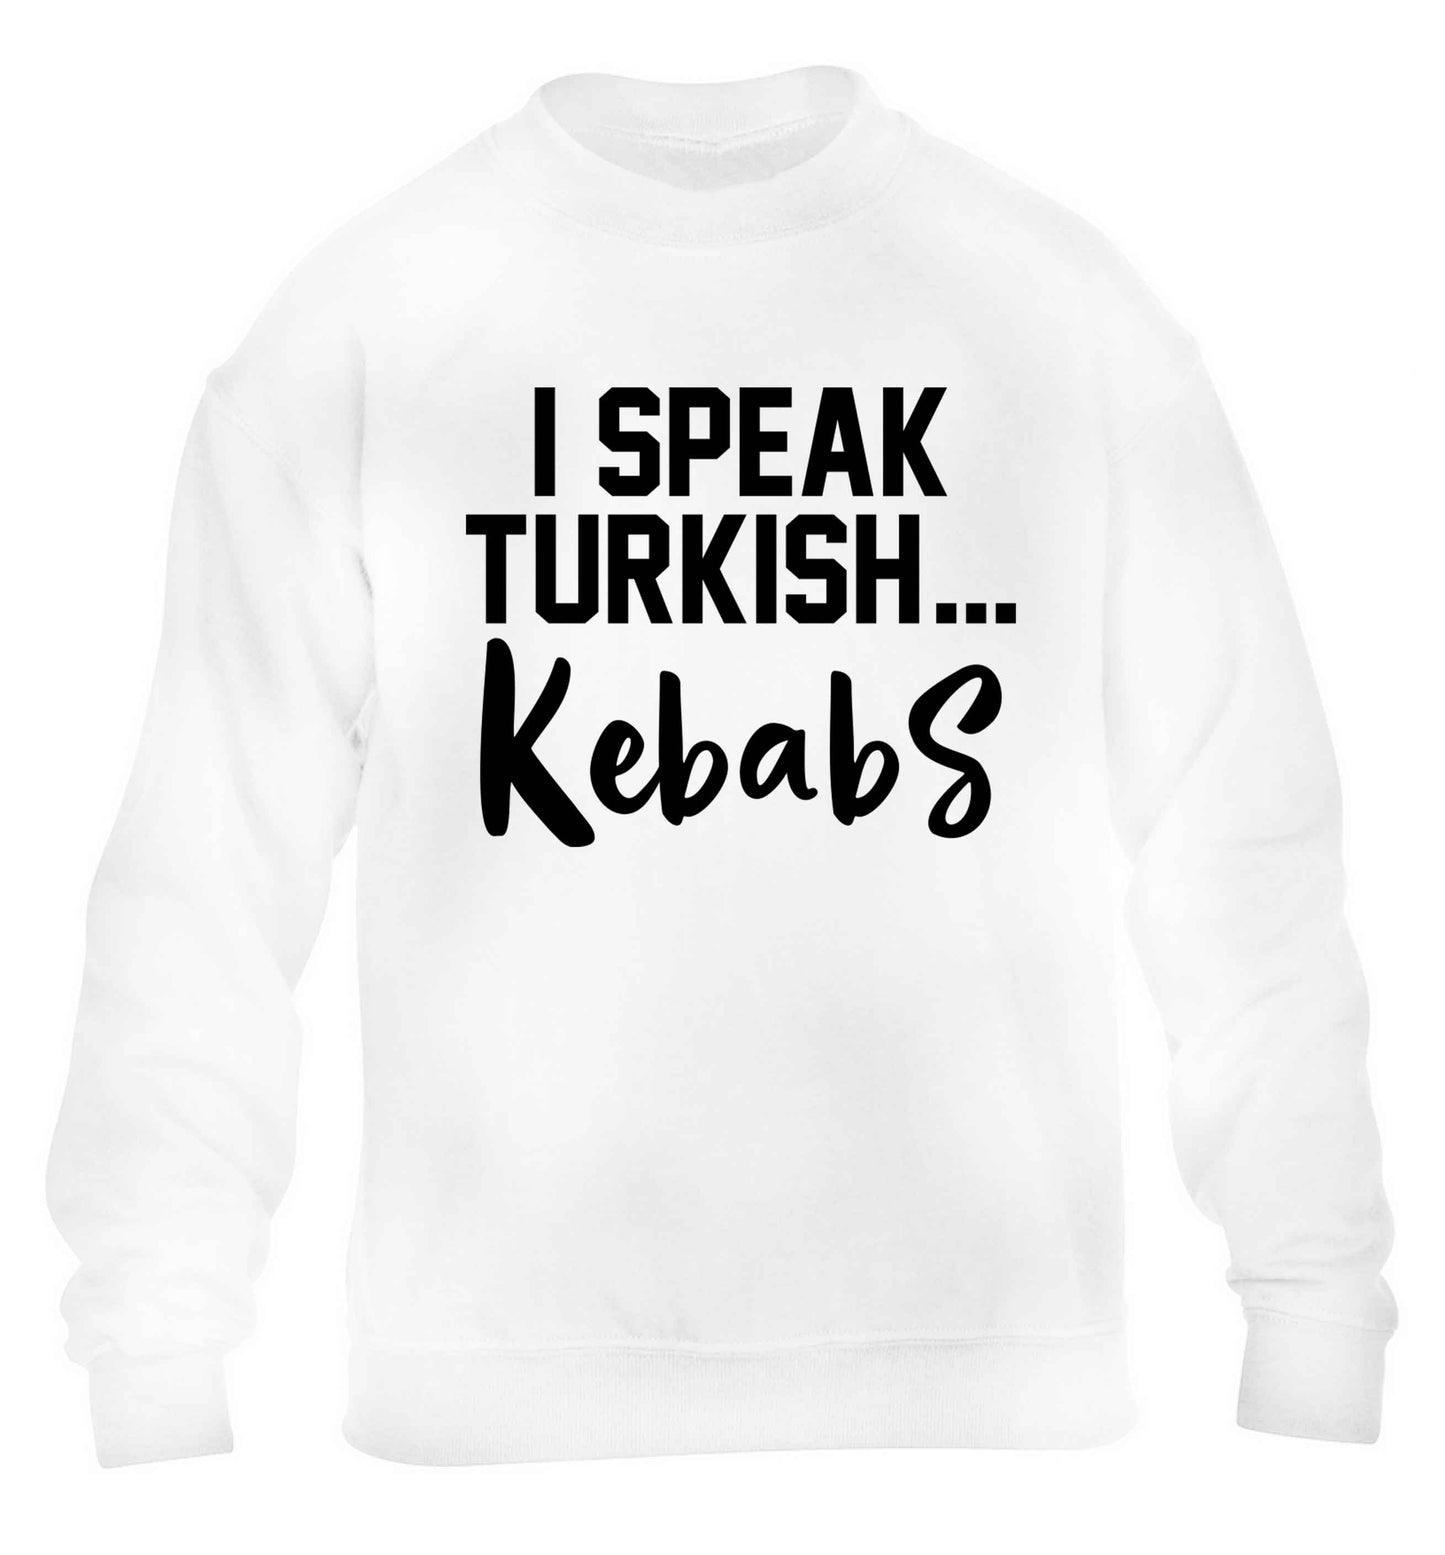 I speak Turkish...kebabs children's white sweater 12-13 Years